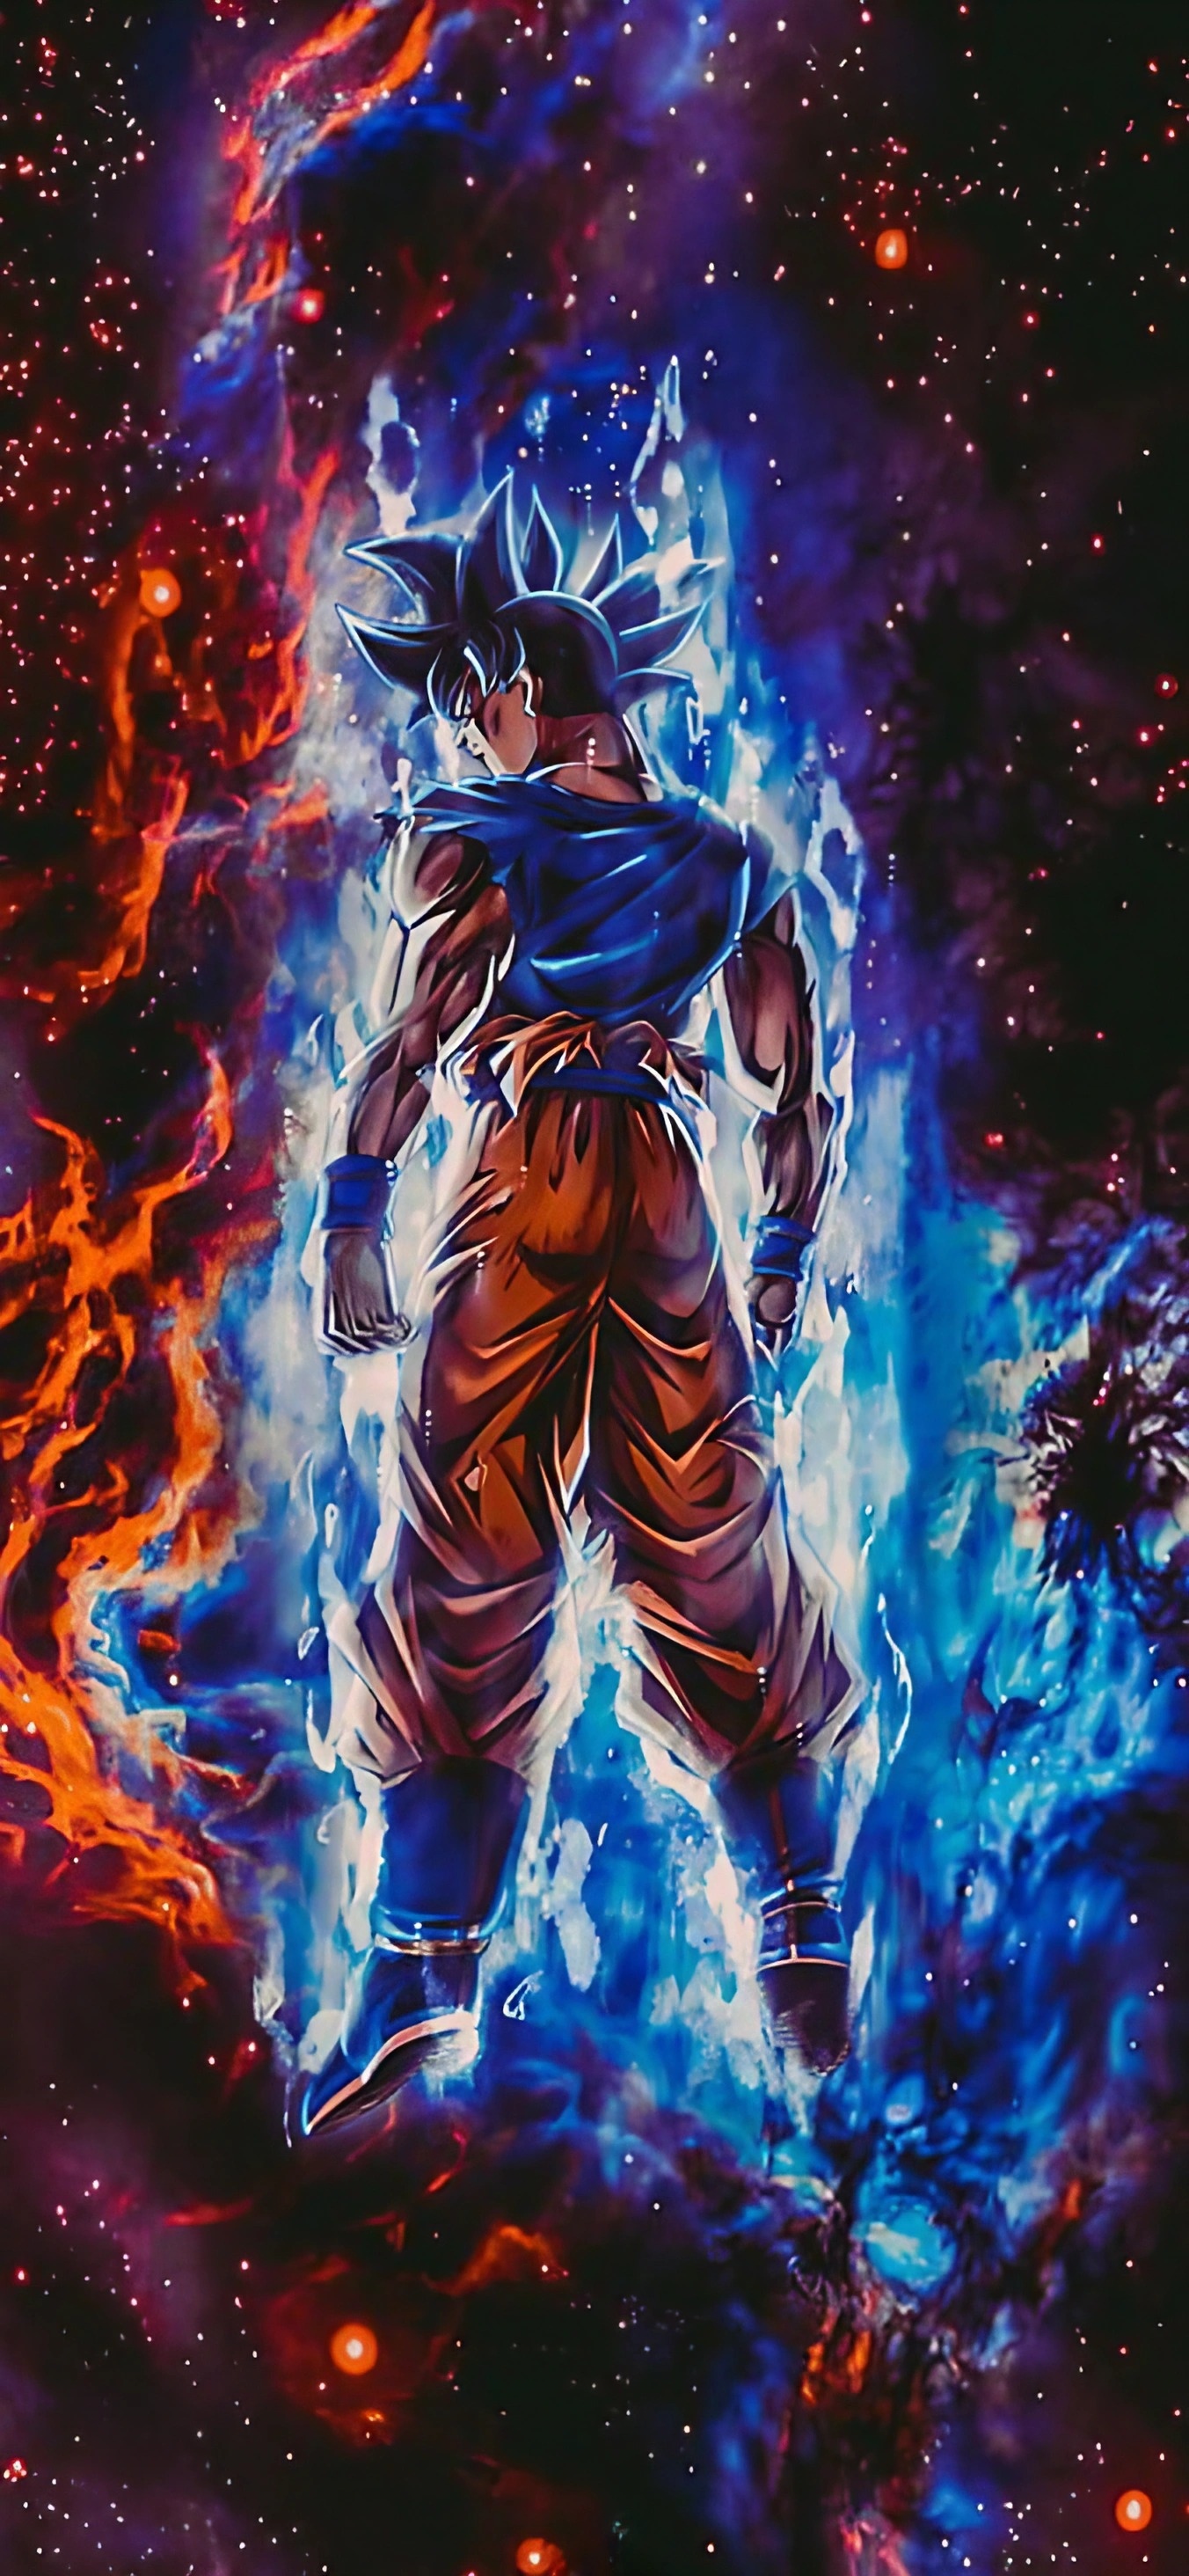 Goku art Wallpaper Download